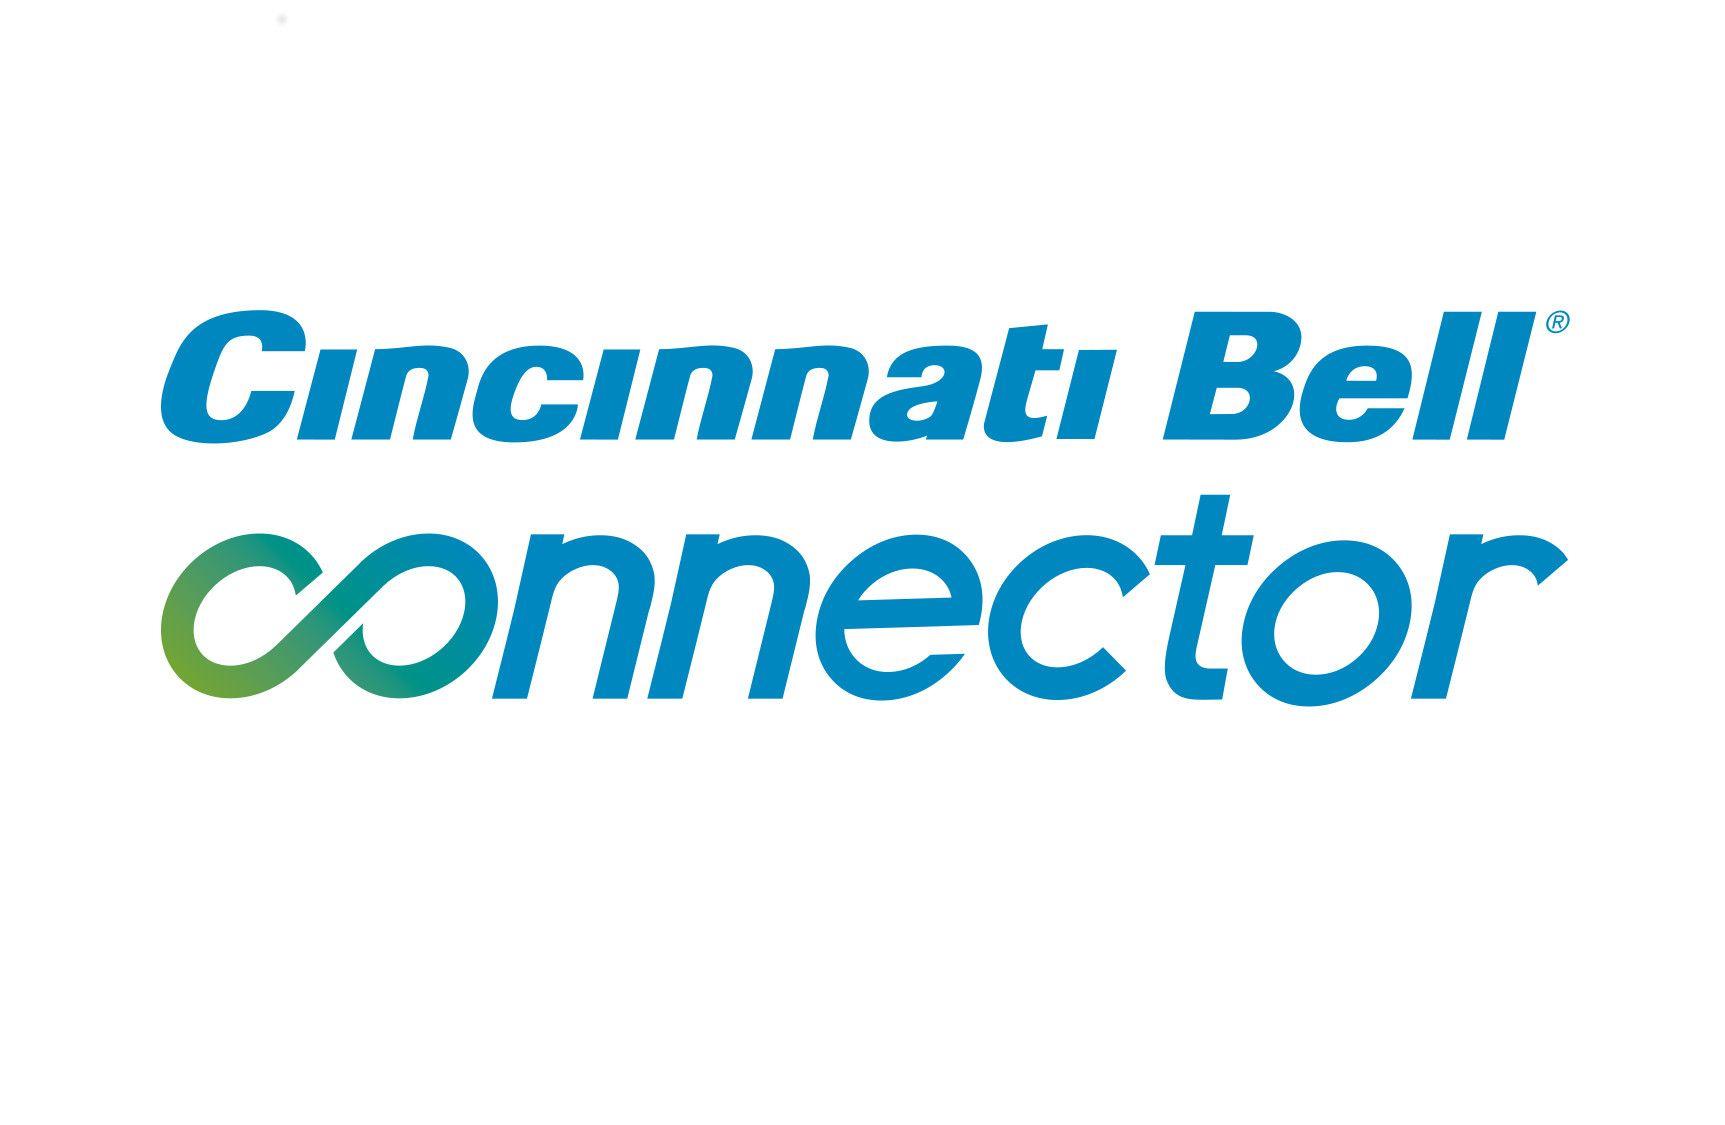 Cinn Logo - Cincinnati Bell Connector - Streetcar